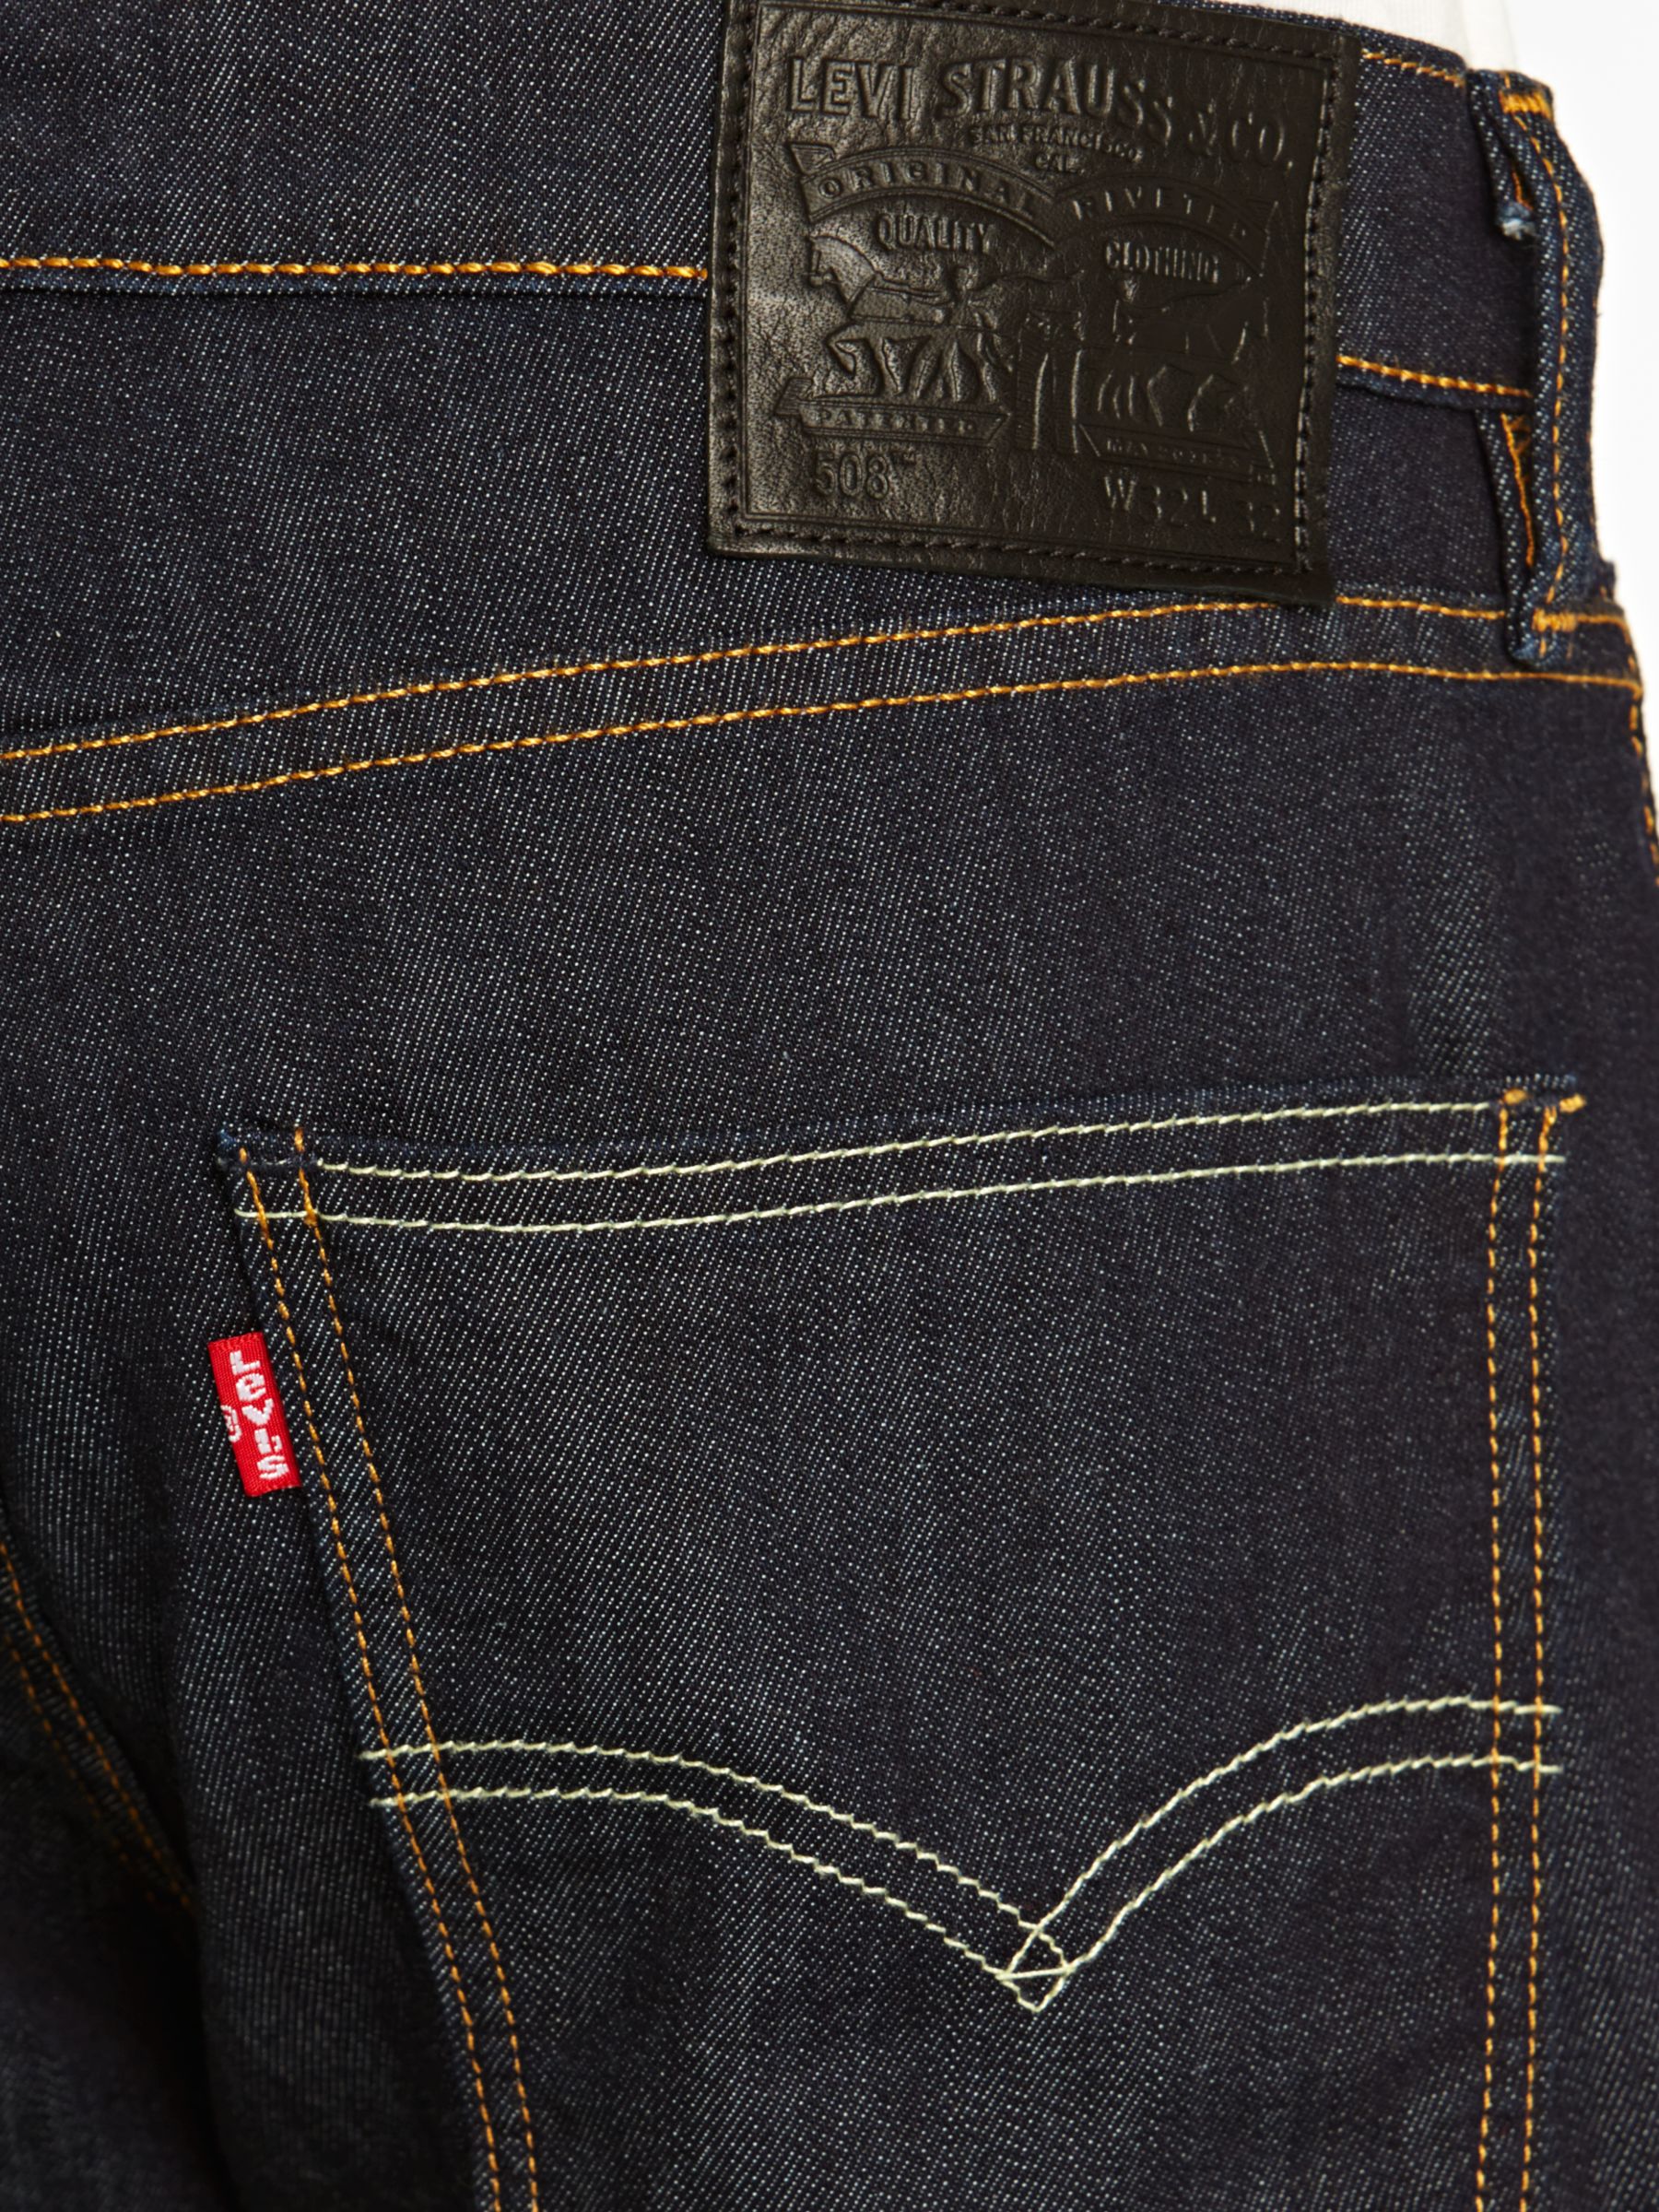 levi's jeans 508 slim tapered